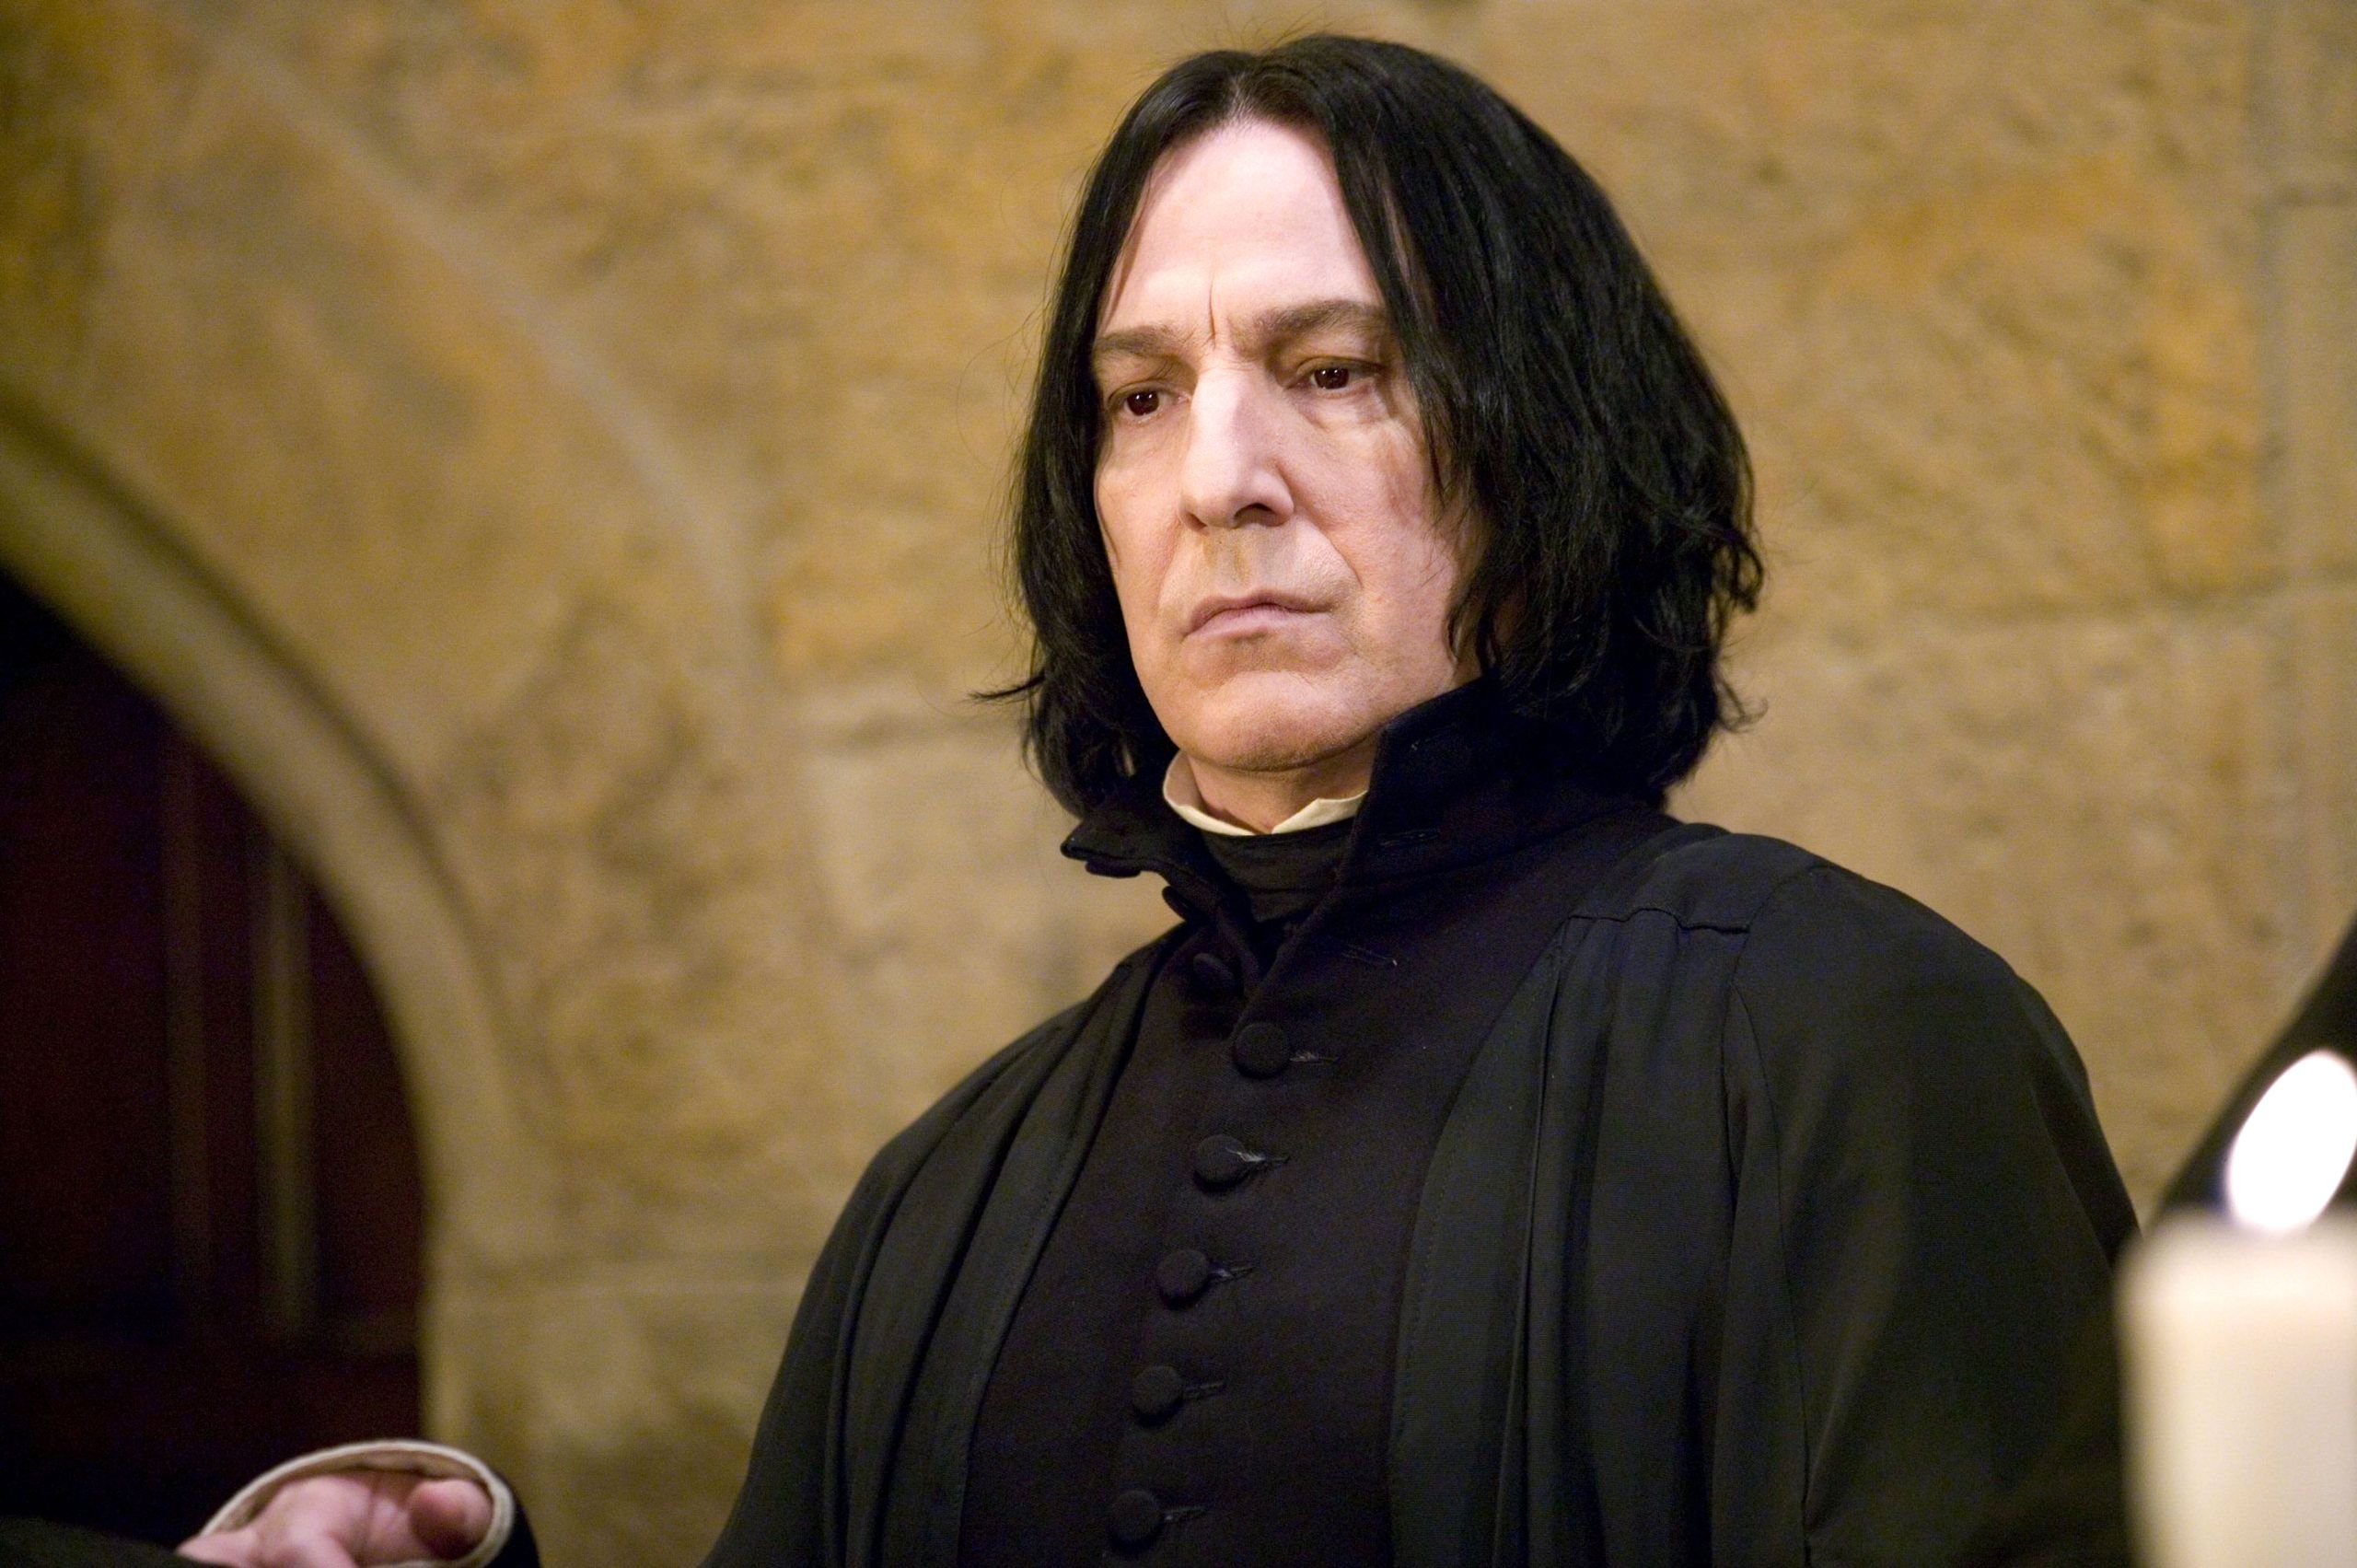 Alan Rickman's Best Harry Potter Moments-The Best of Severus Snape